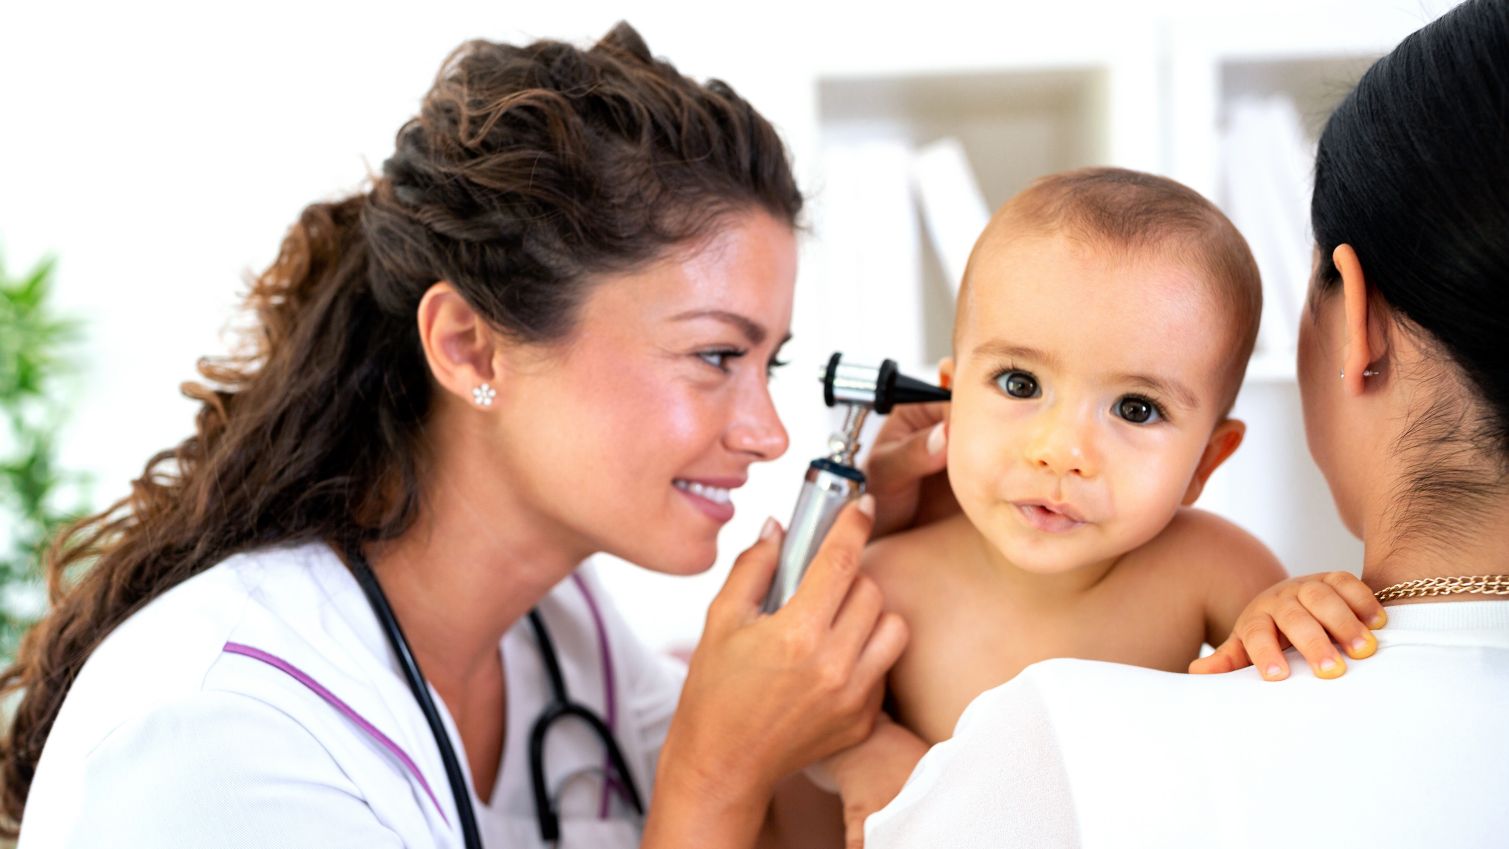 Medicaid doctor examines baby's ear